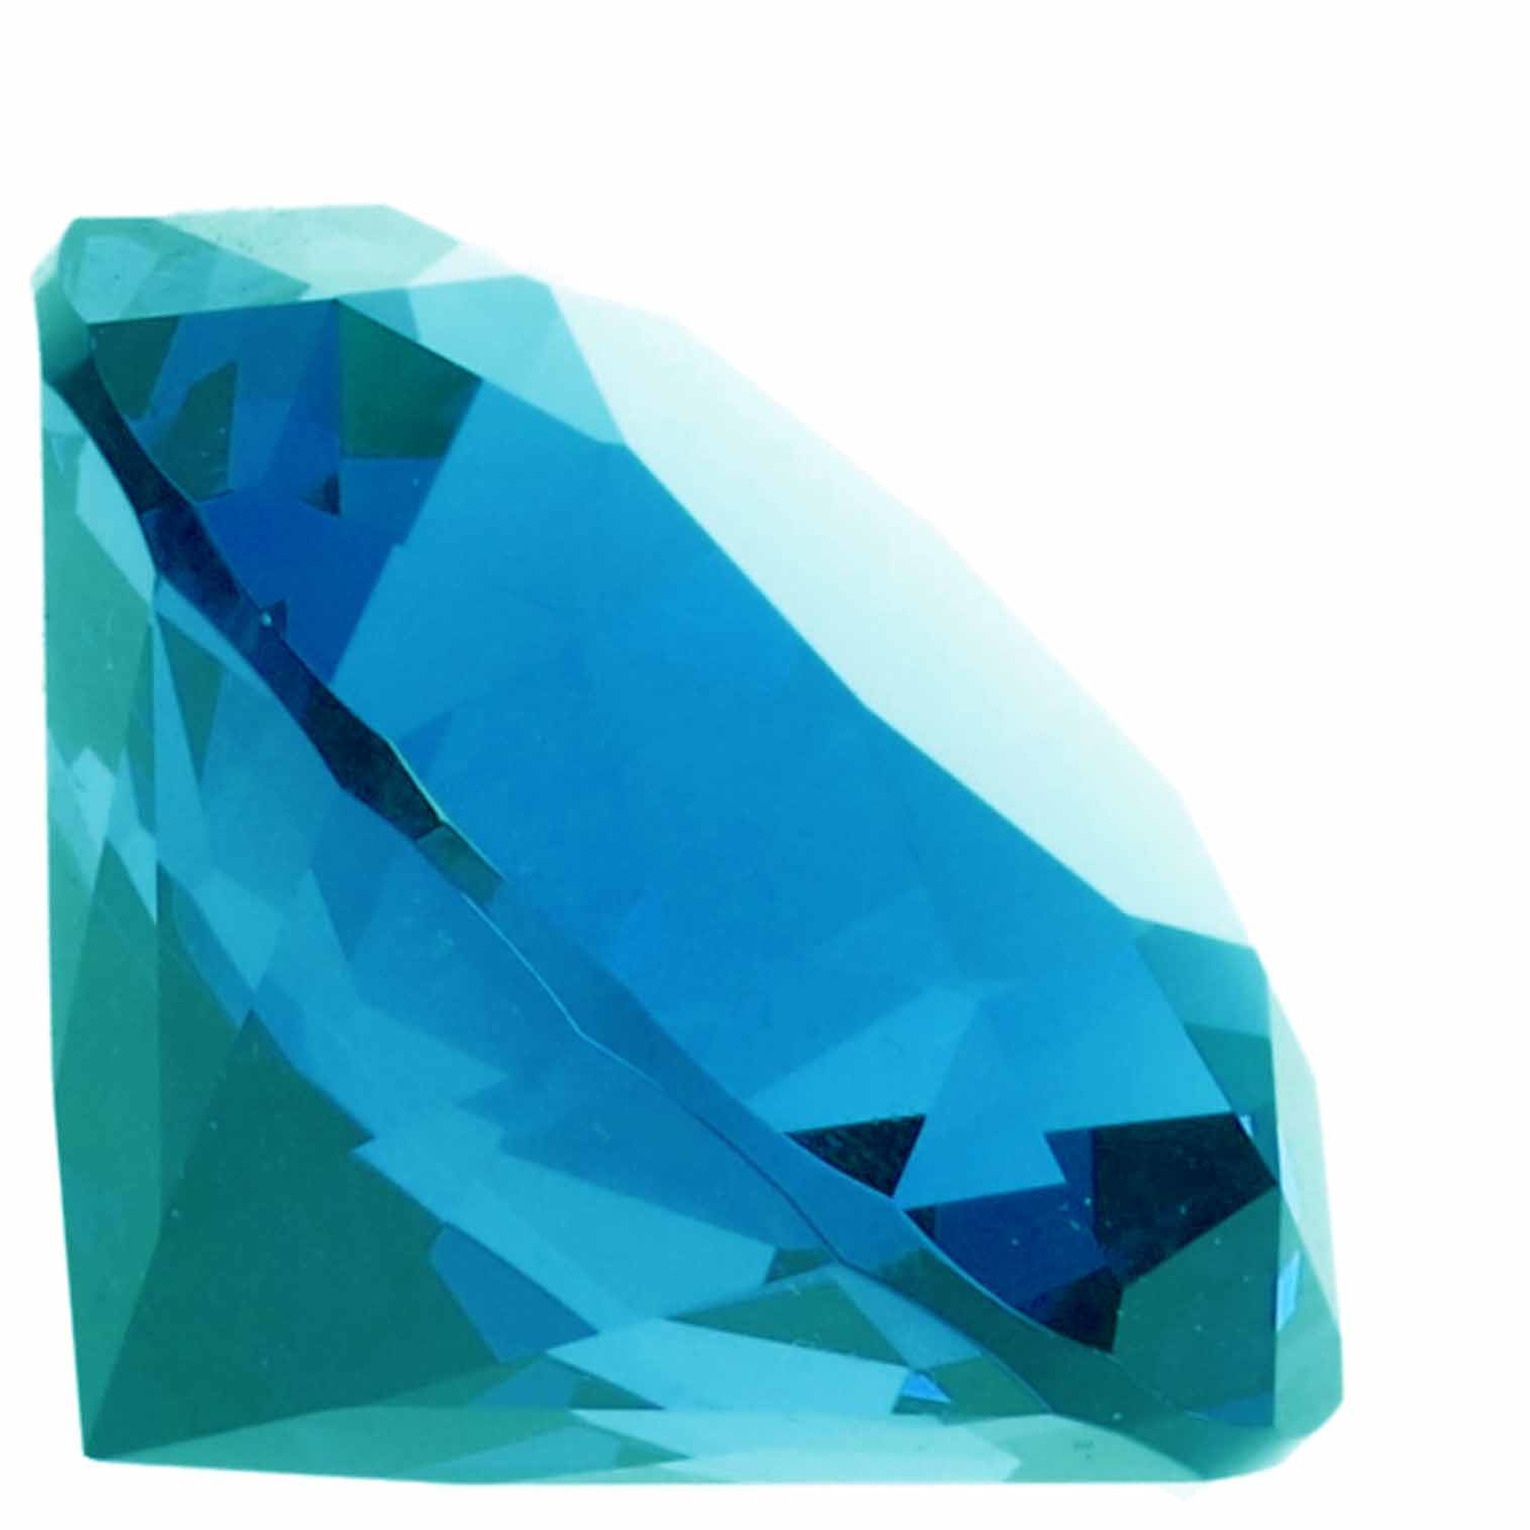 Decoratie diamanten-edelstenen-kristallen turqouise blauw 4 cm